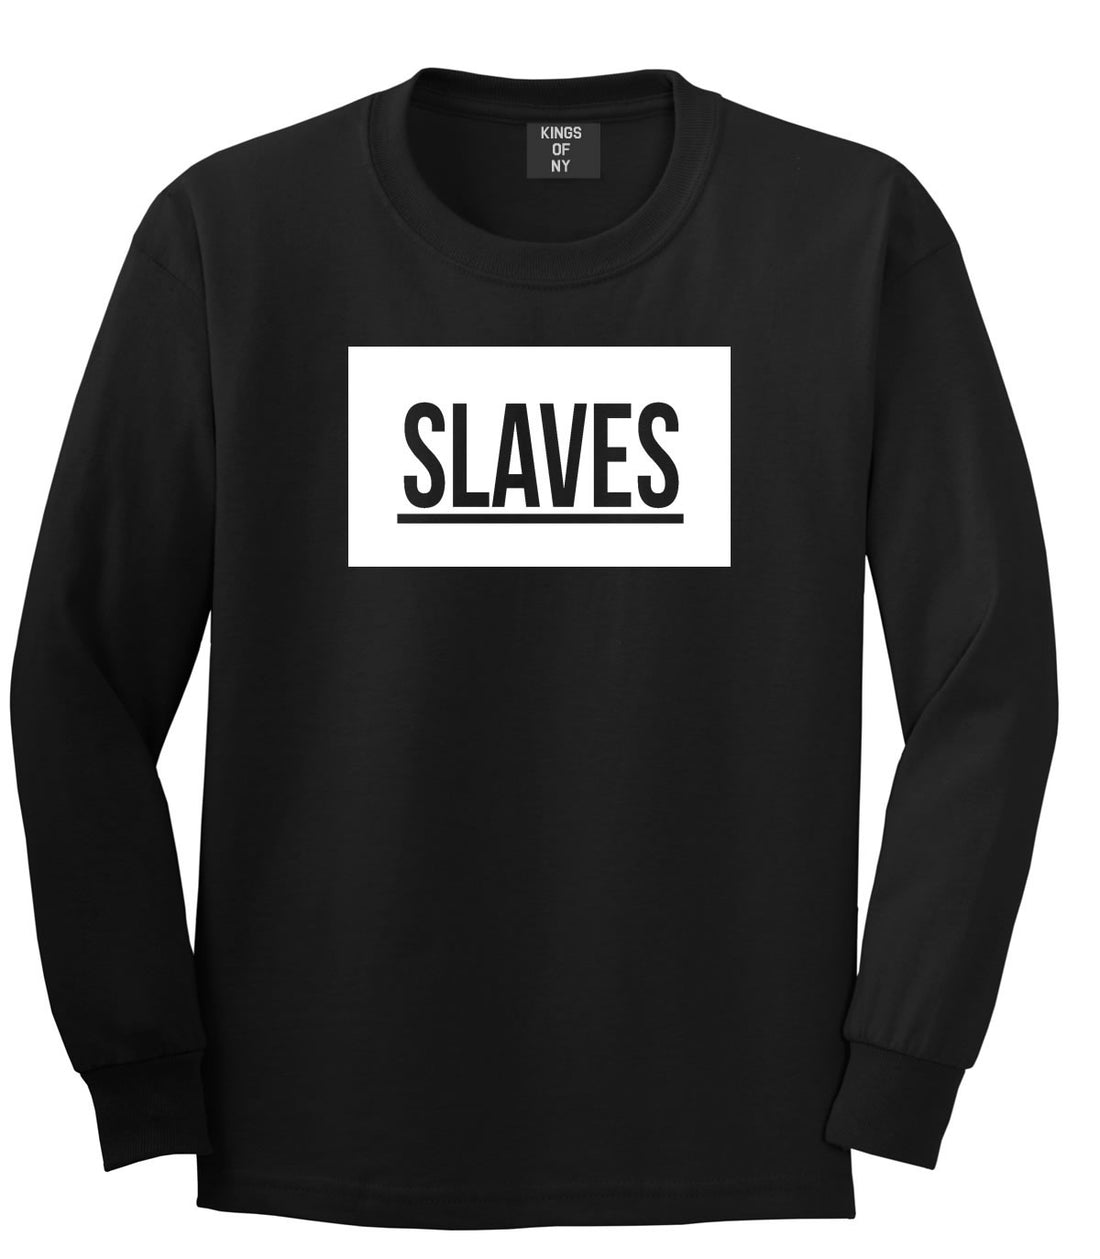 Slaves Fashion Kanye Lyrics Music West East Long Sleeve Boys Kids T-Shirt In Black by Kings Of NY